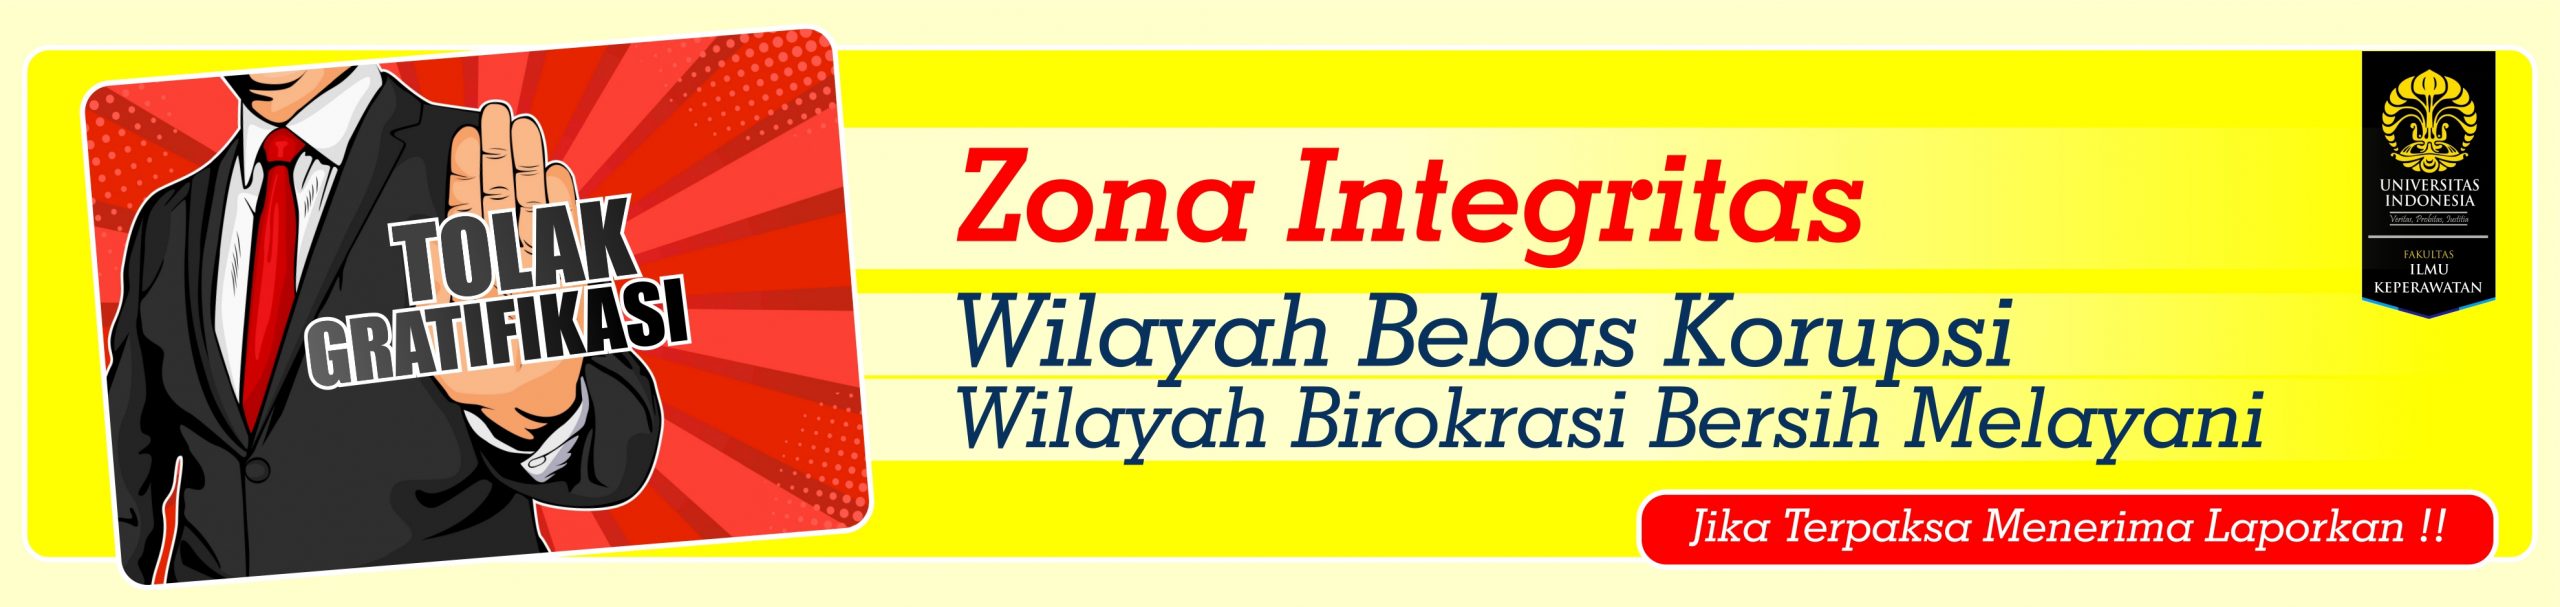 UI Zona Integritas ok_page-0002